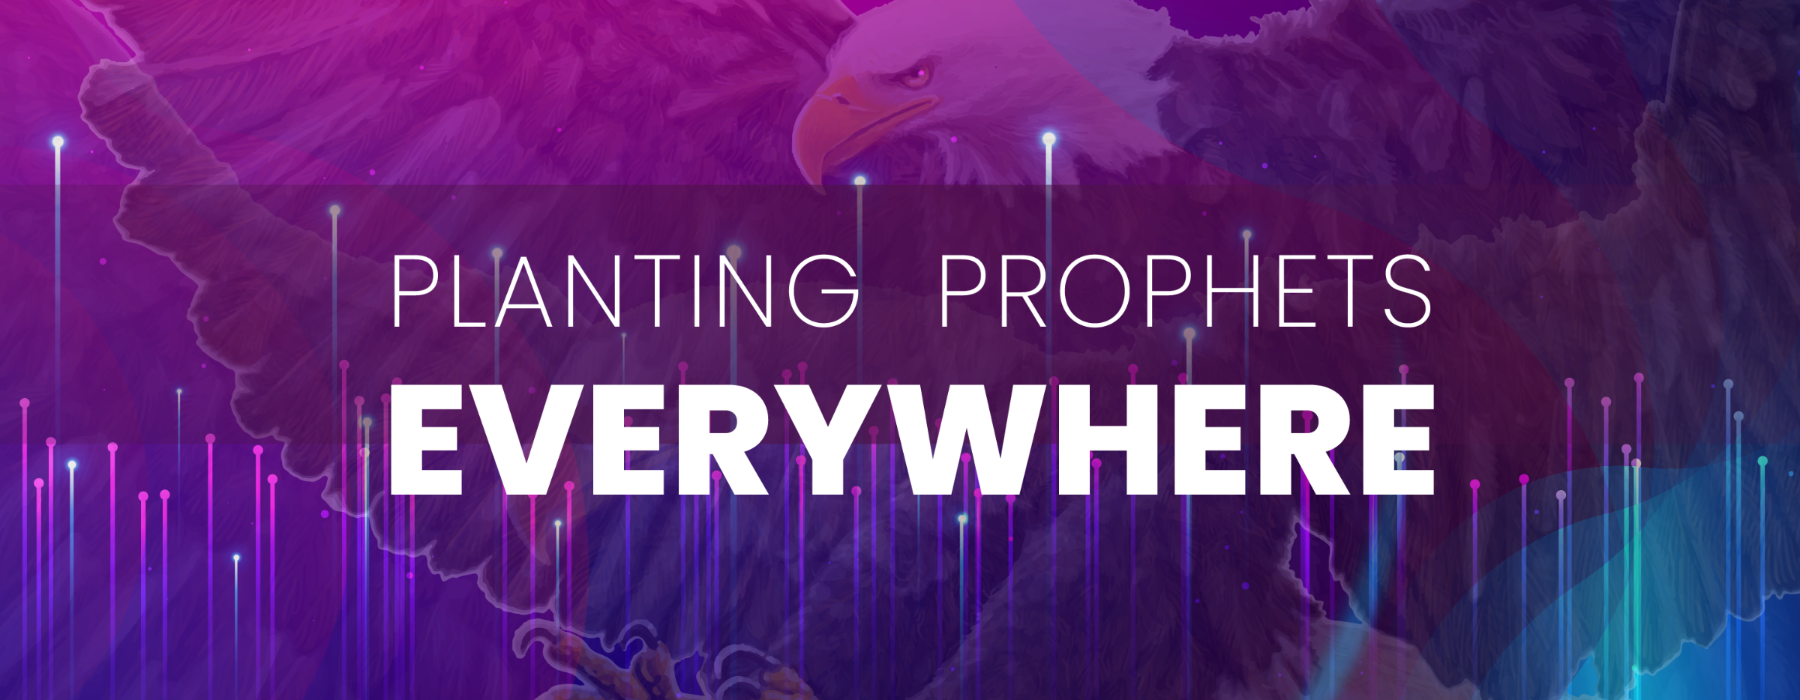 Planting Prophets Everywhere